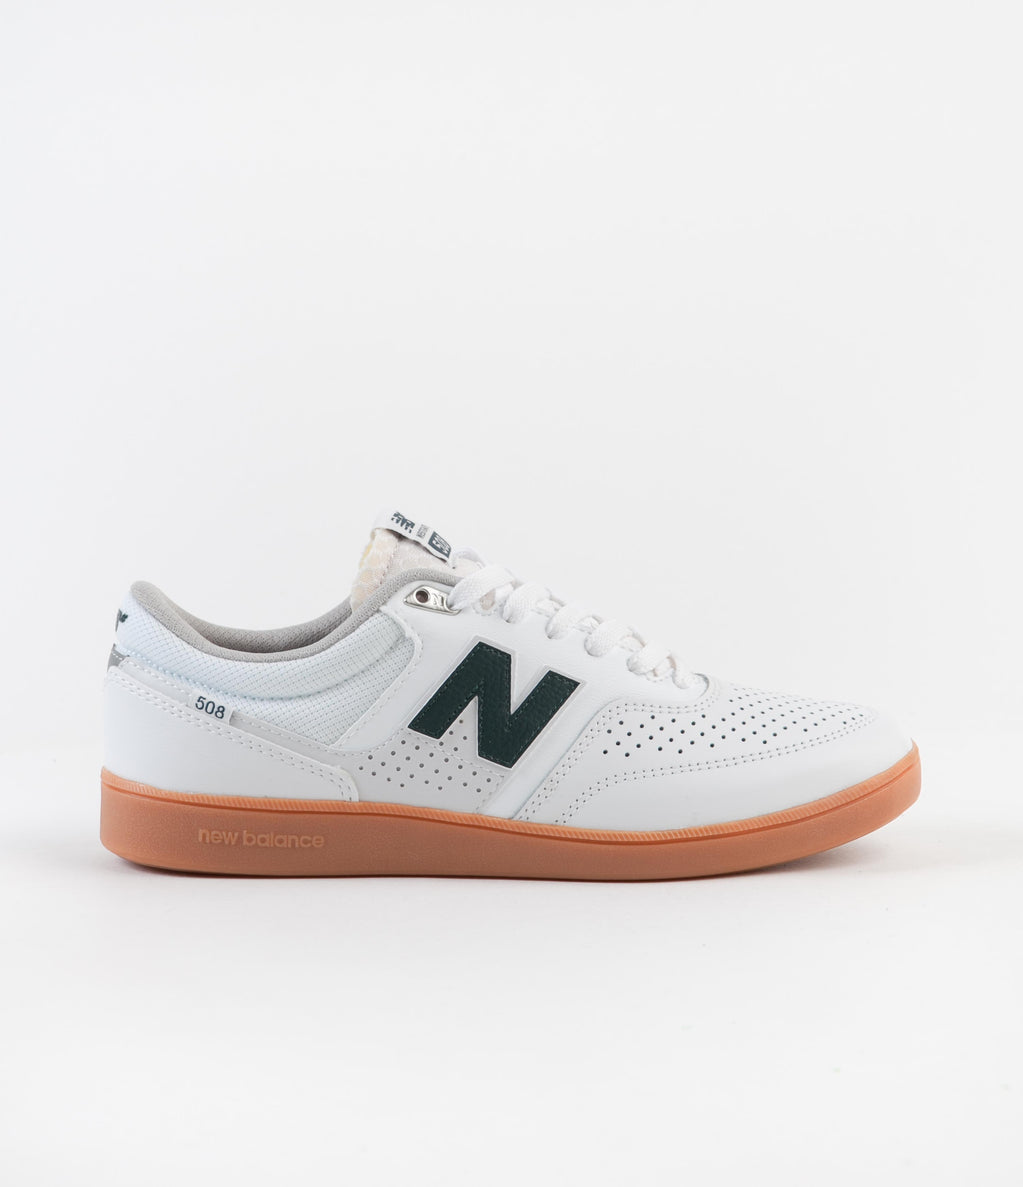 New Balance Numeric 508 Brandon Westgate Shoes - White / Navy / Gum ...